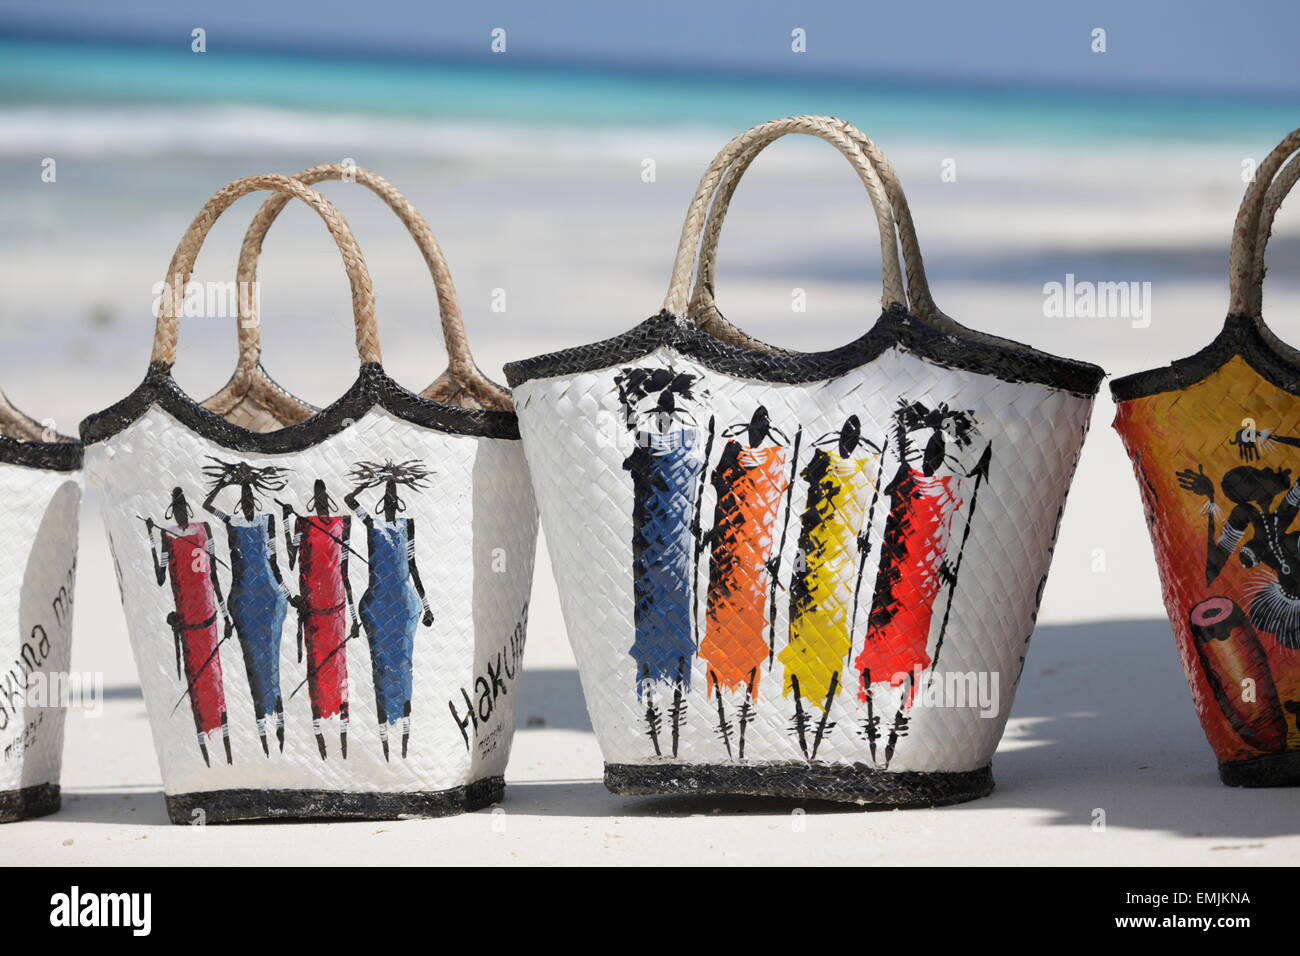 Handwoven baskets on the beach of Zanzibar Stock Photo